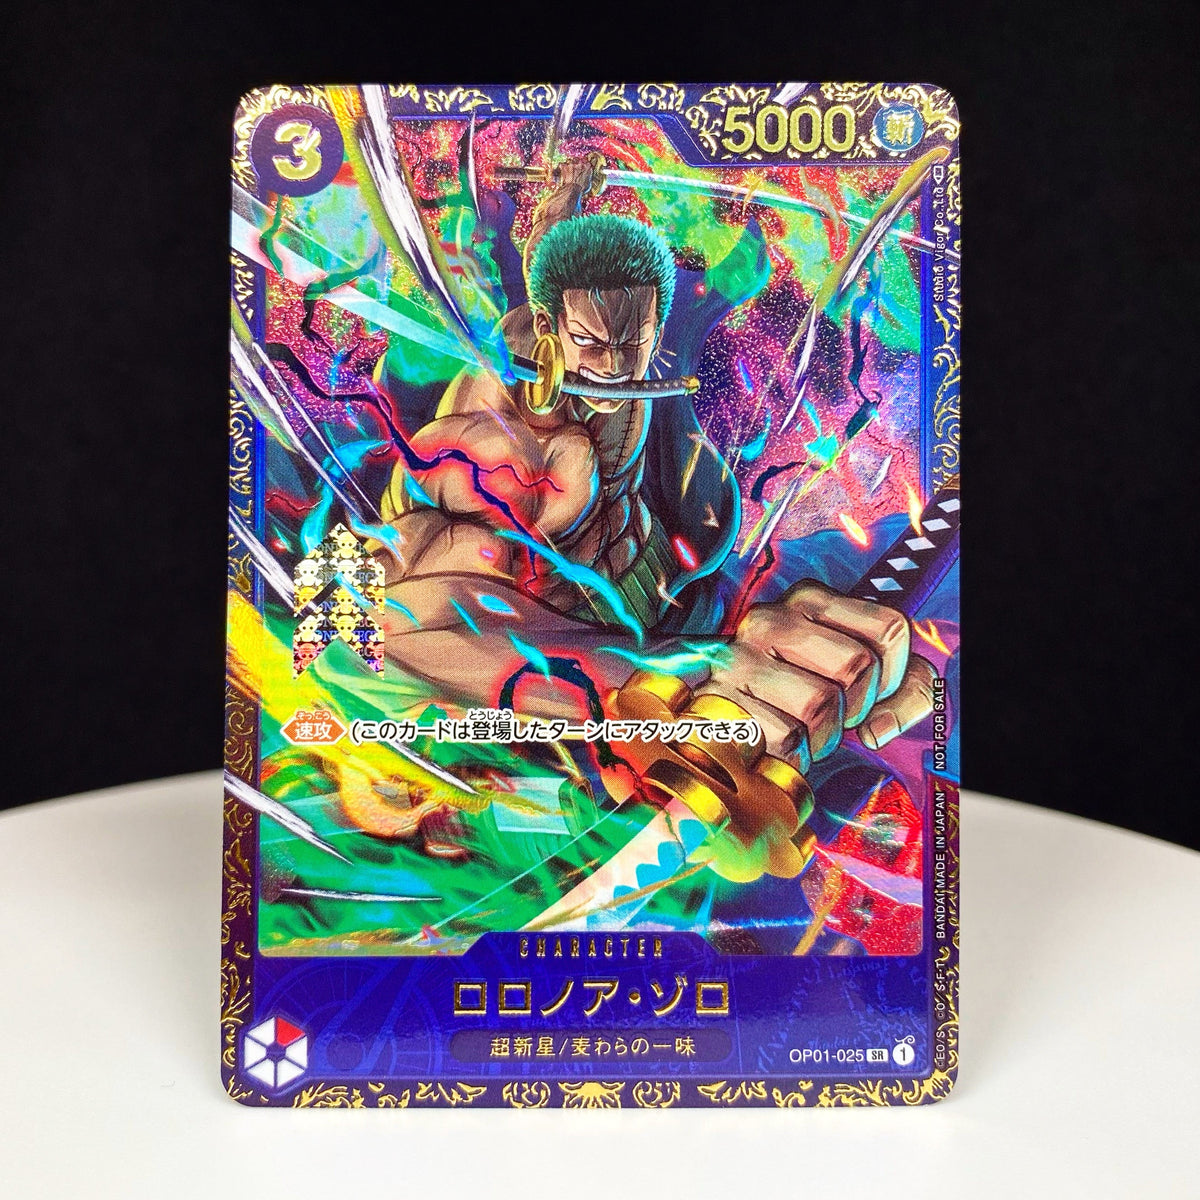 Roronoa Zoro SR OP-DH-0M01-025 One Piece Anime Trading Card TCG